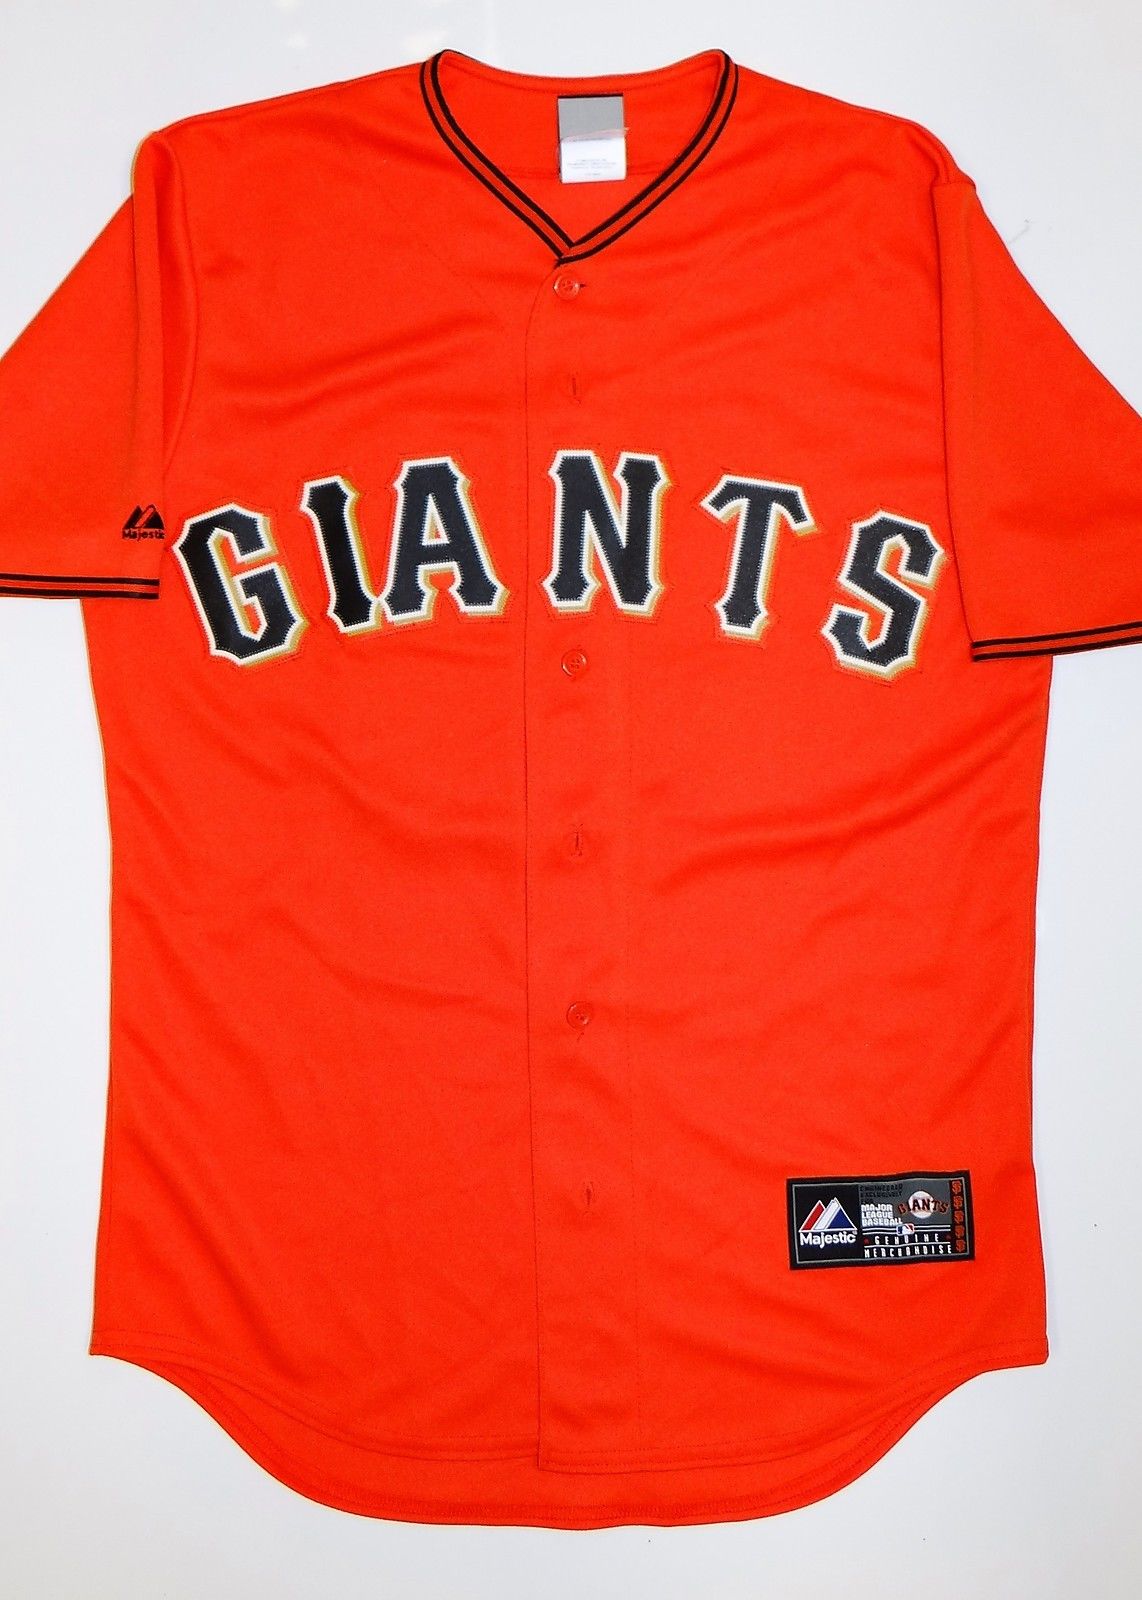 Matt Cain Autographed Orange San Francisco Giants Jersey- JSA